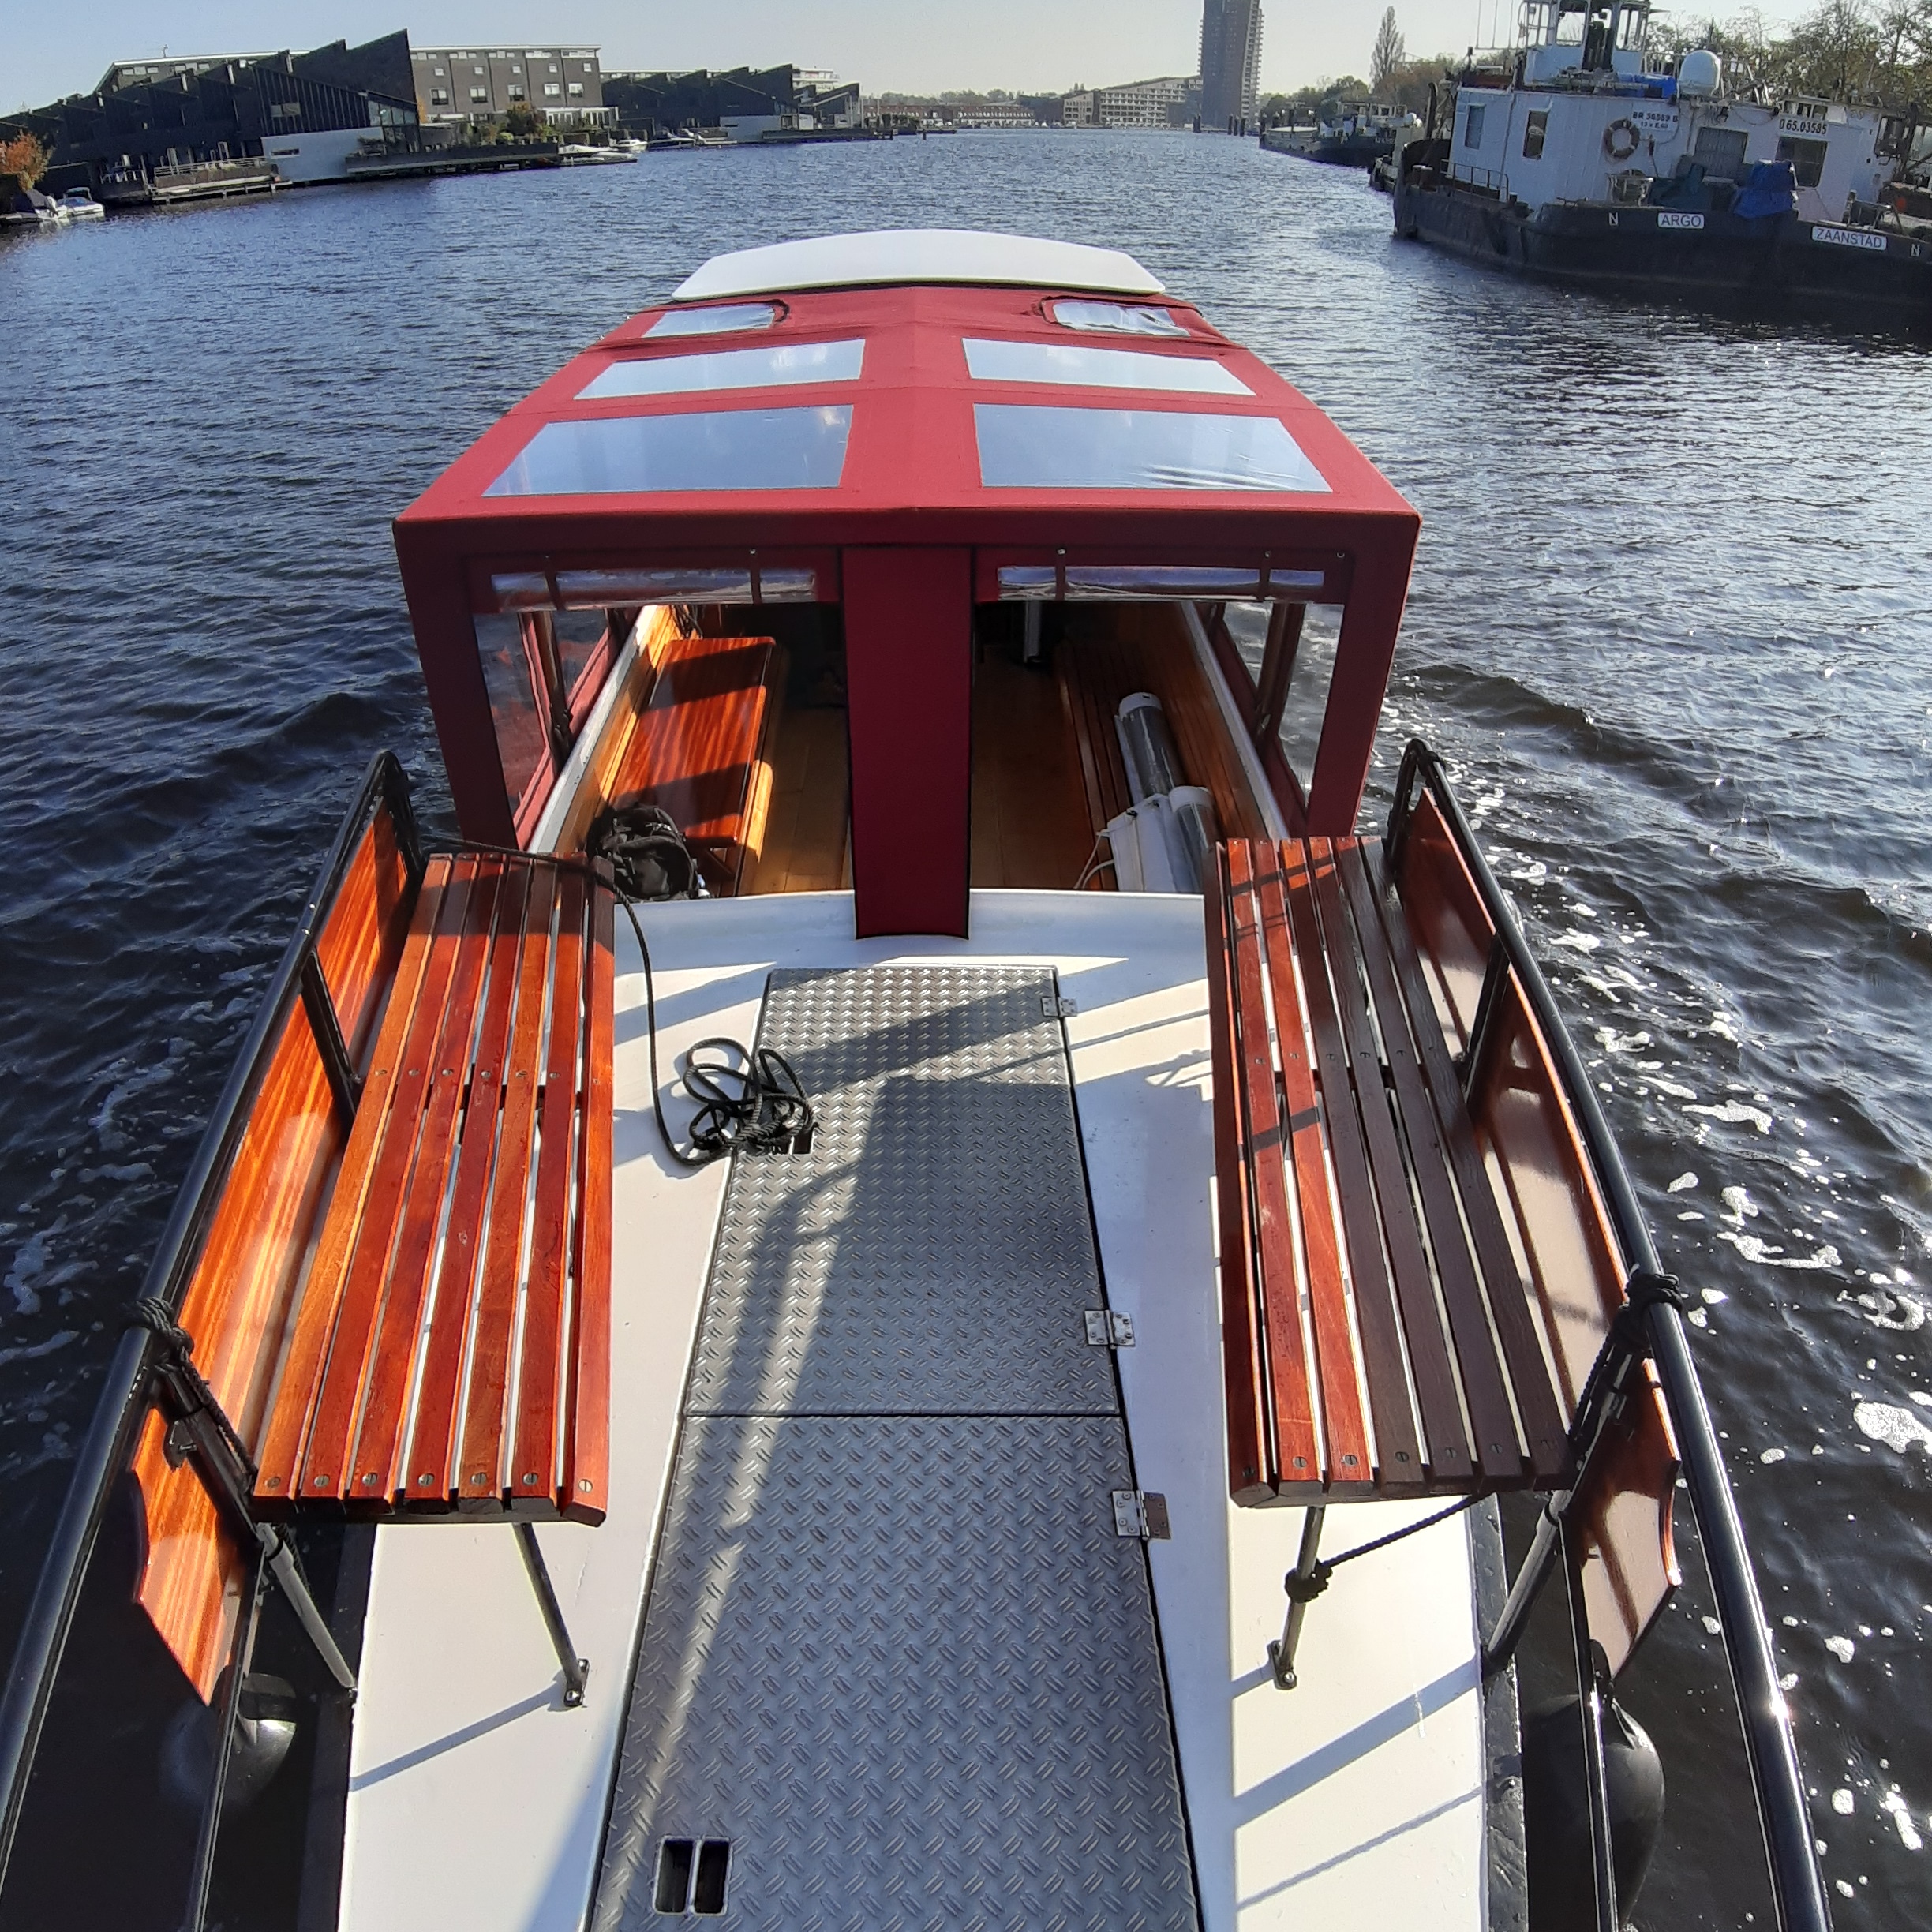 sebi boat tours amsterdam